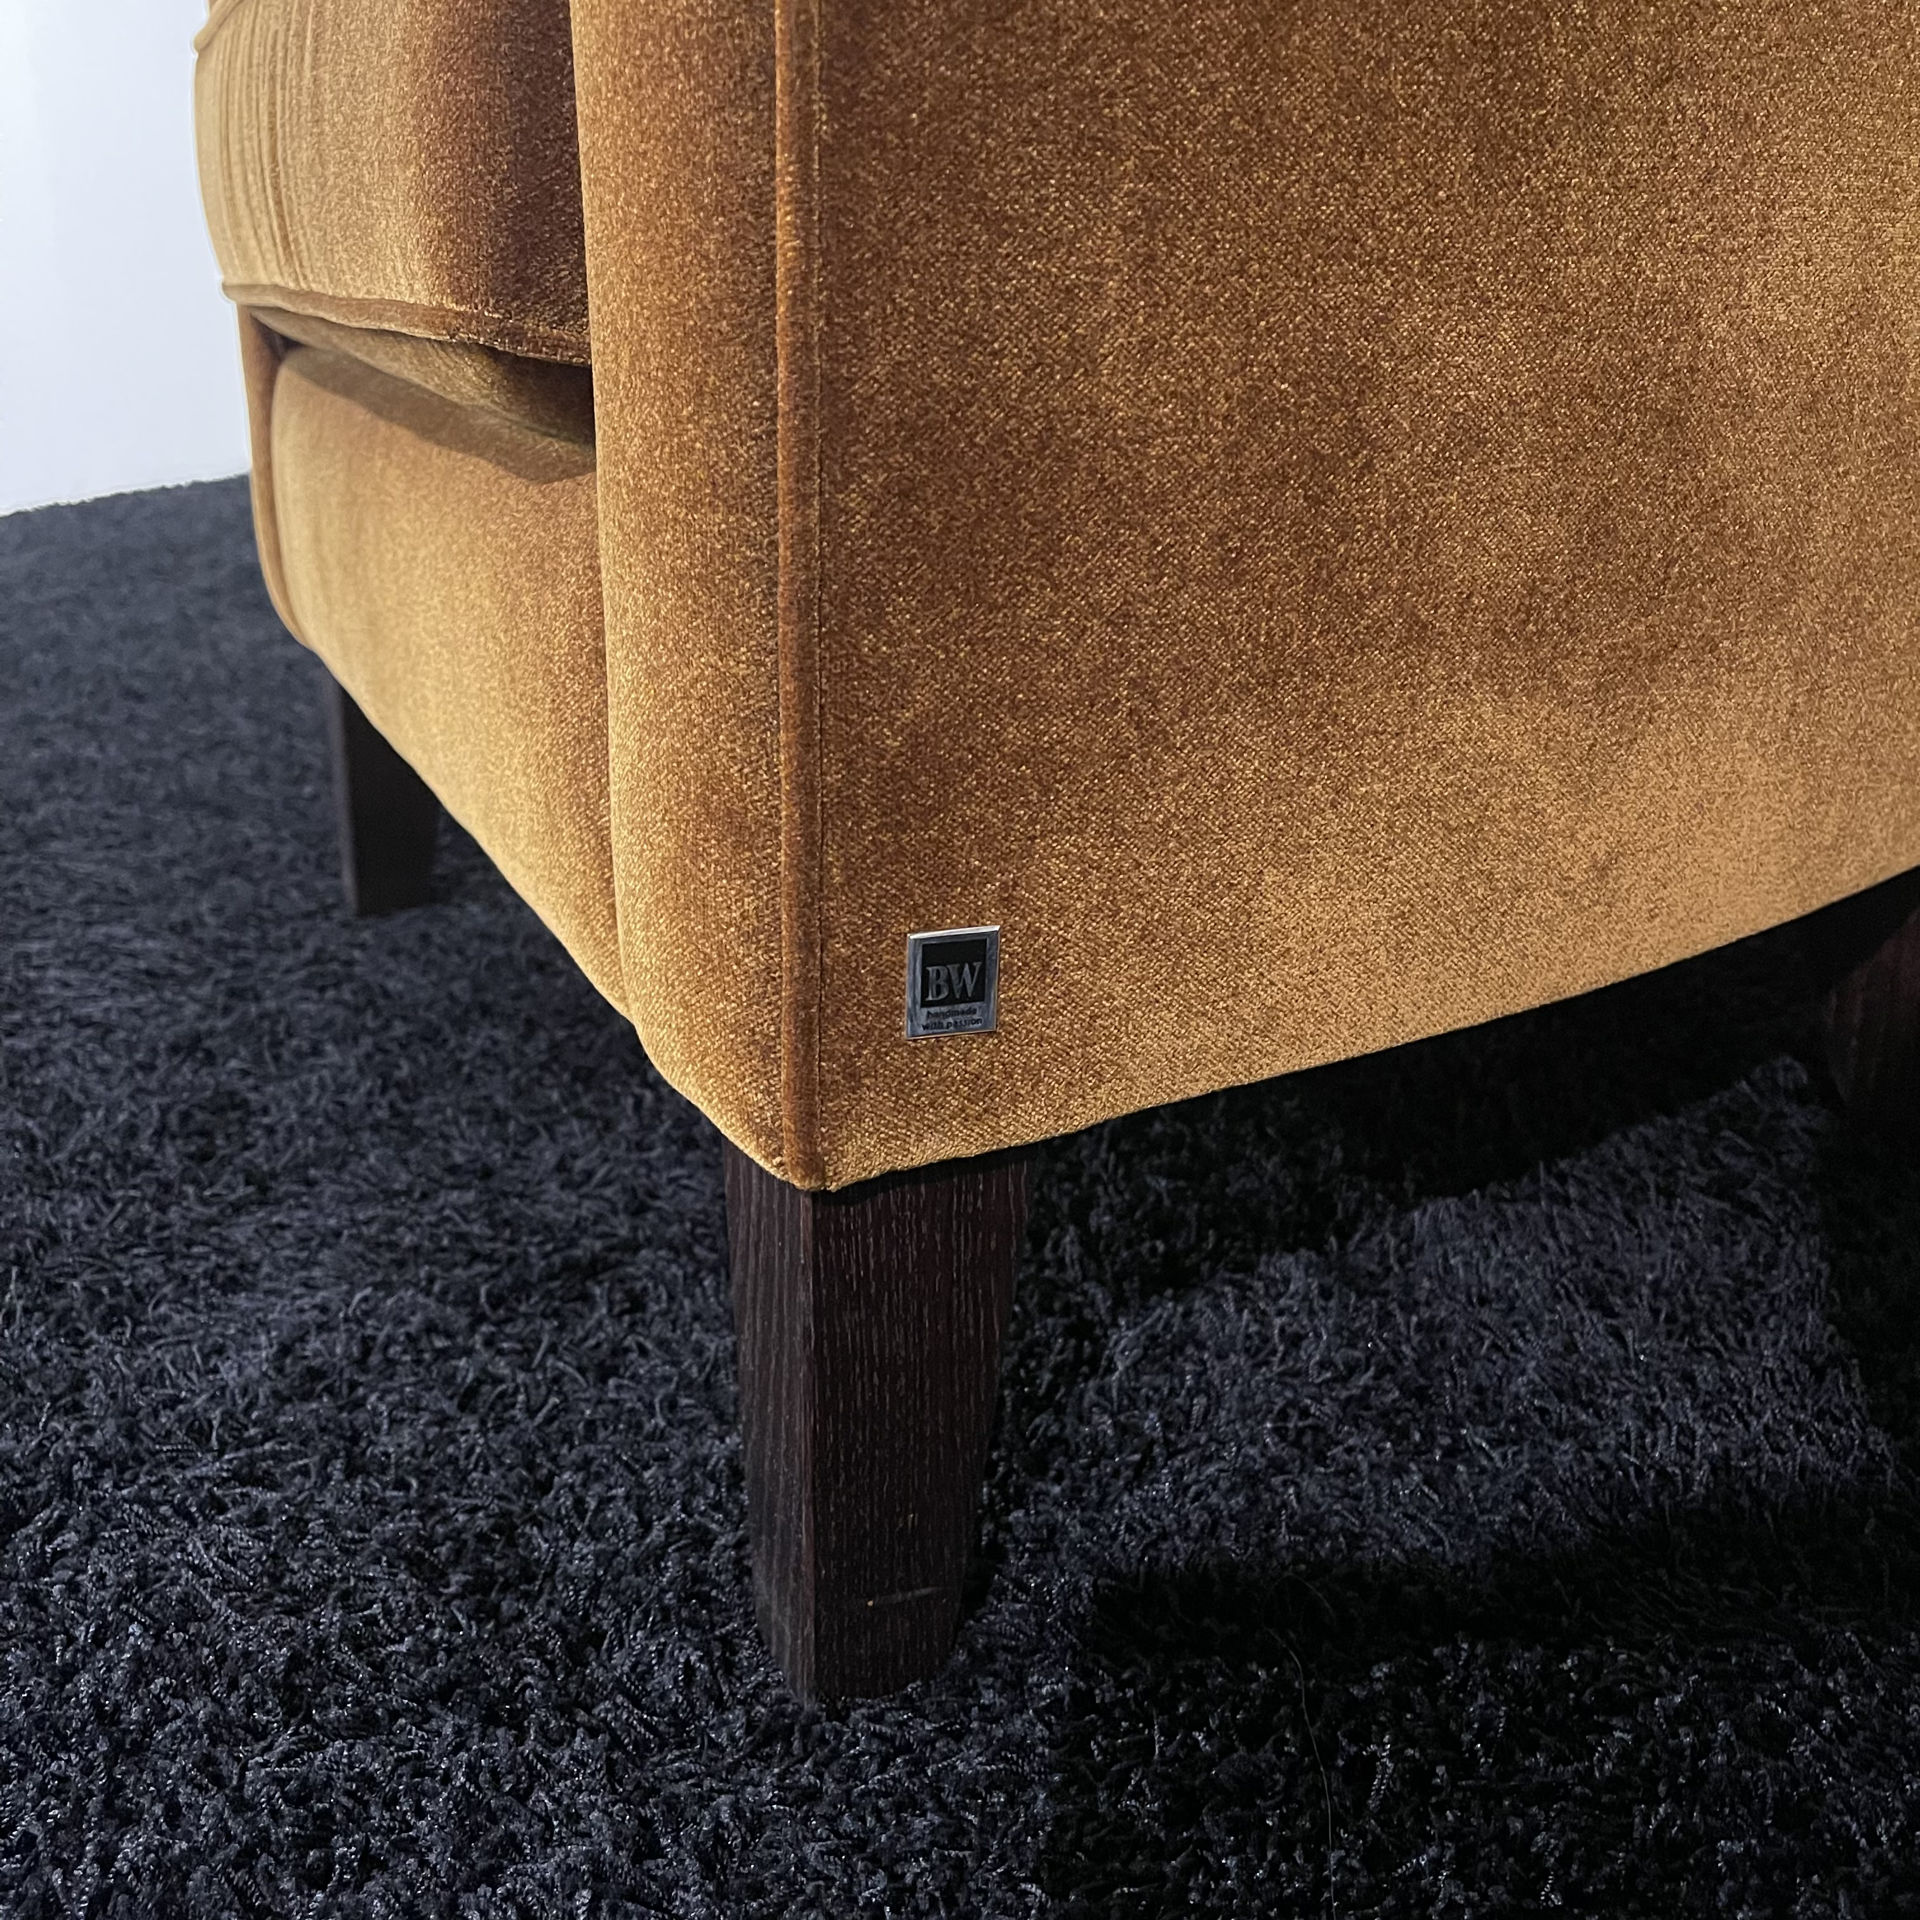 Bielefelder Werkstätten Conte fauteuil - Details